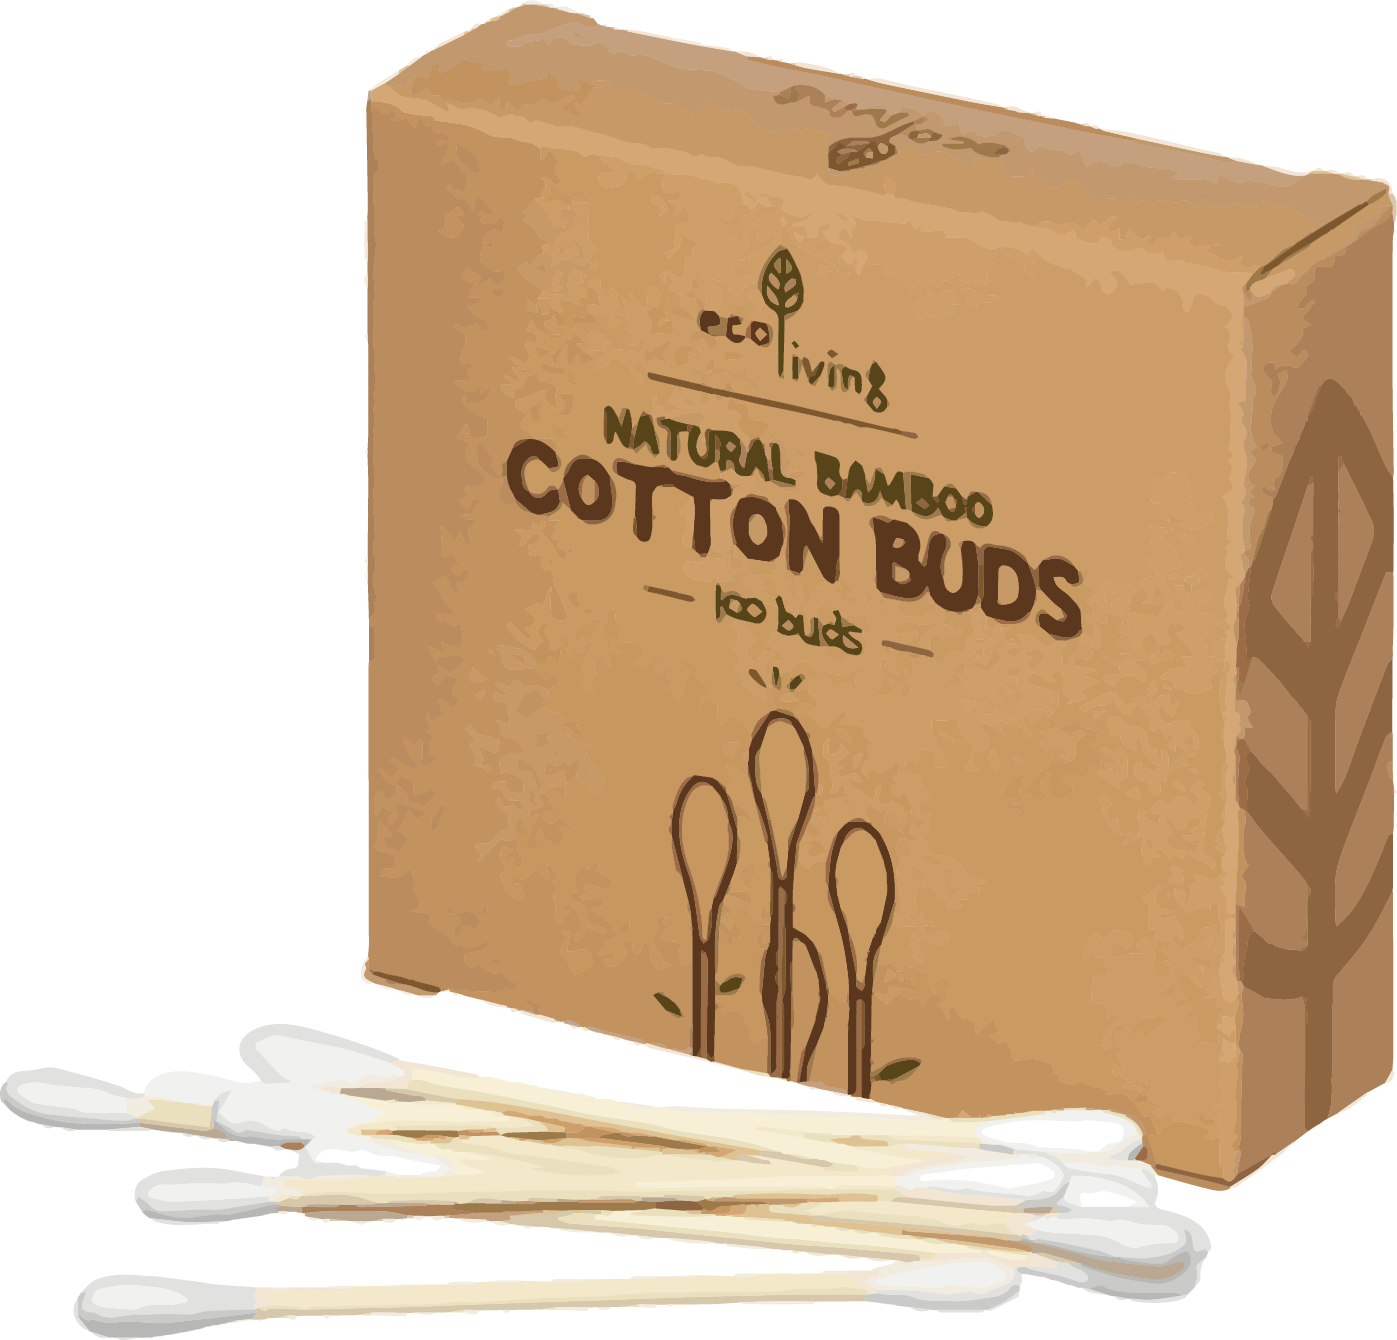 Bamboo Cotton Buds